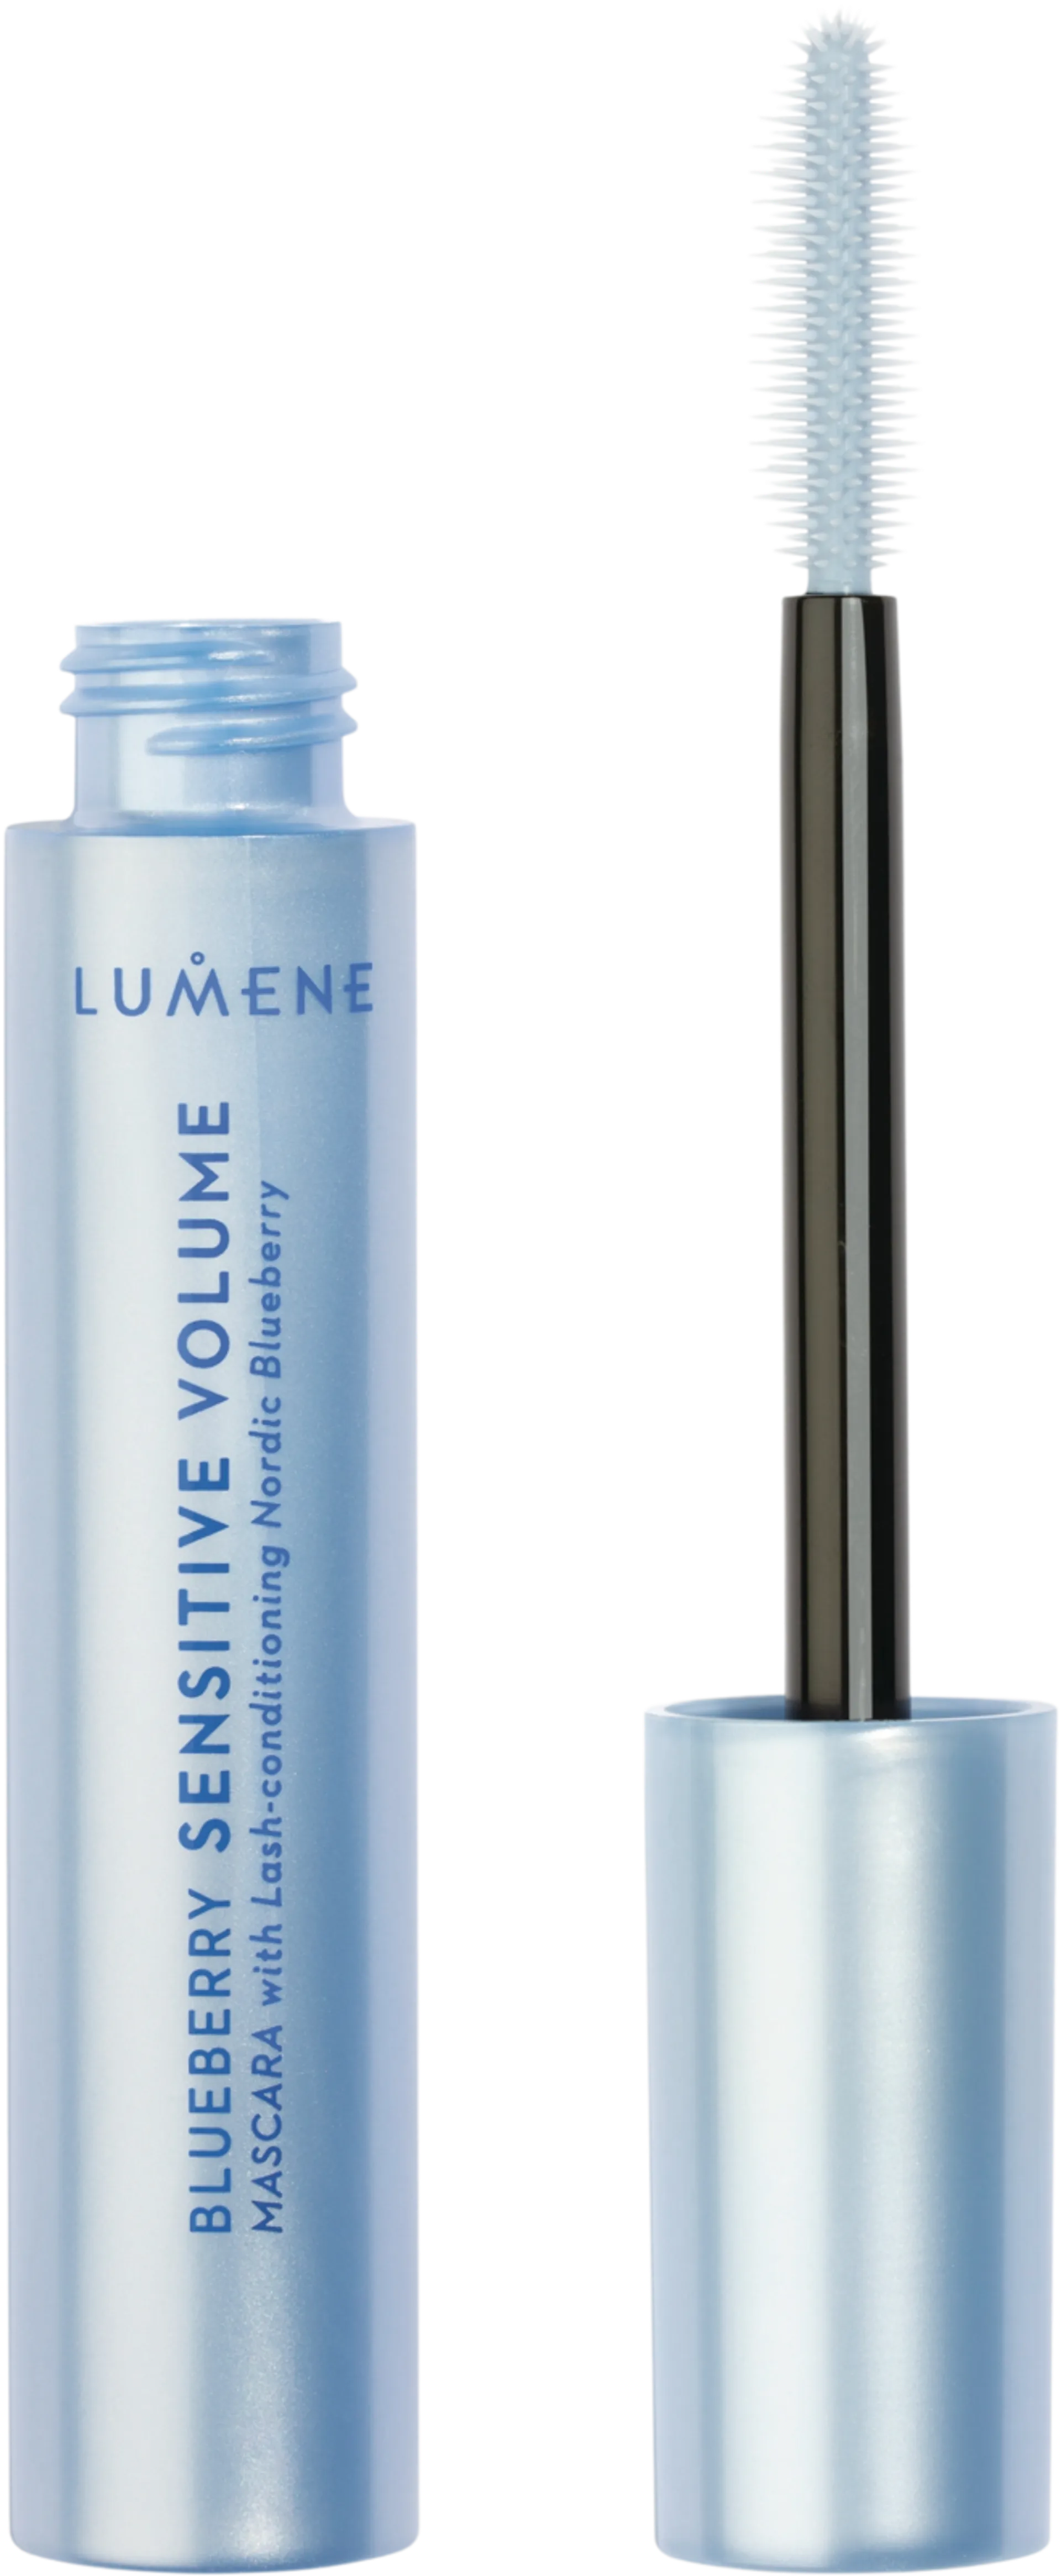 Lumene Blueberry Sensitive Volume Mascara 14ml - 2